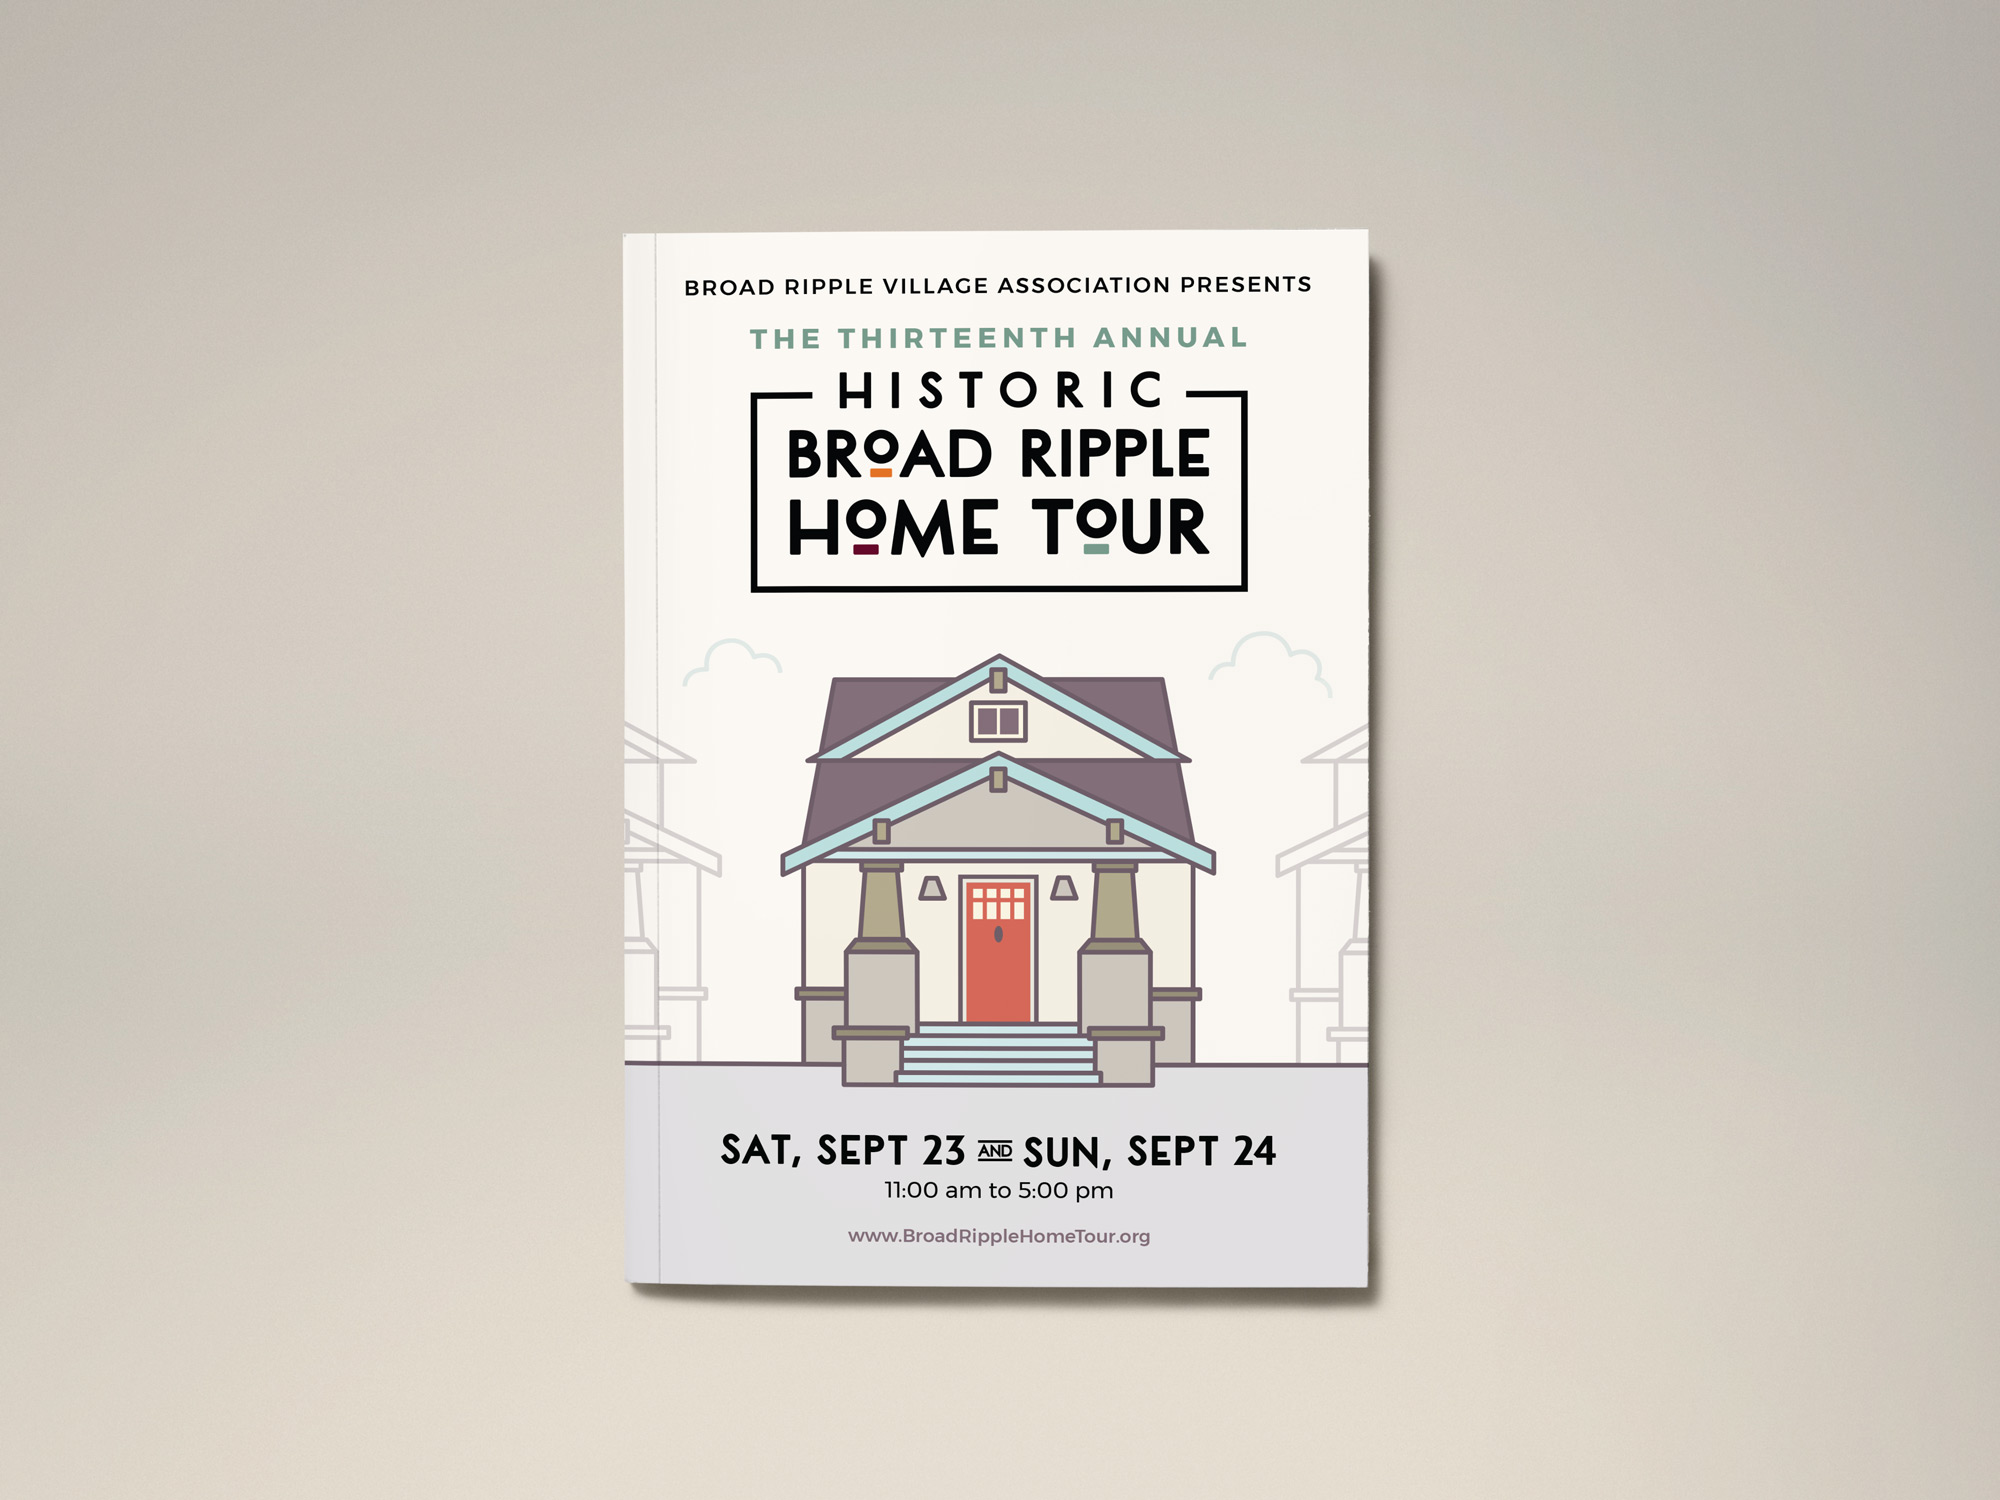 mast-design-co-work-broad-ripple-historic-home-tour-print-design-booklet-front.jpg